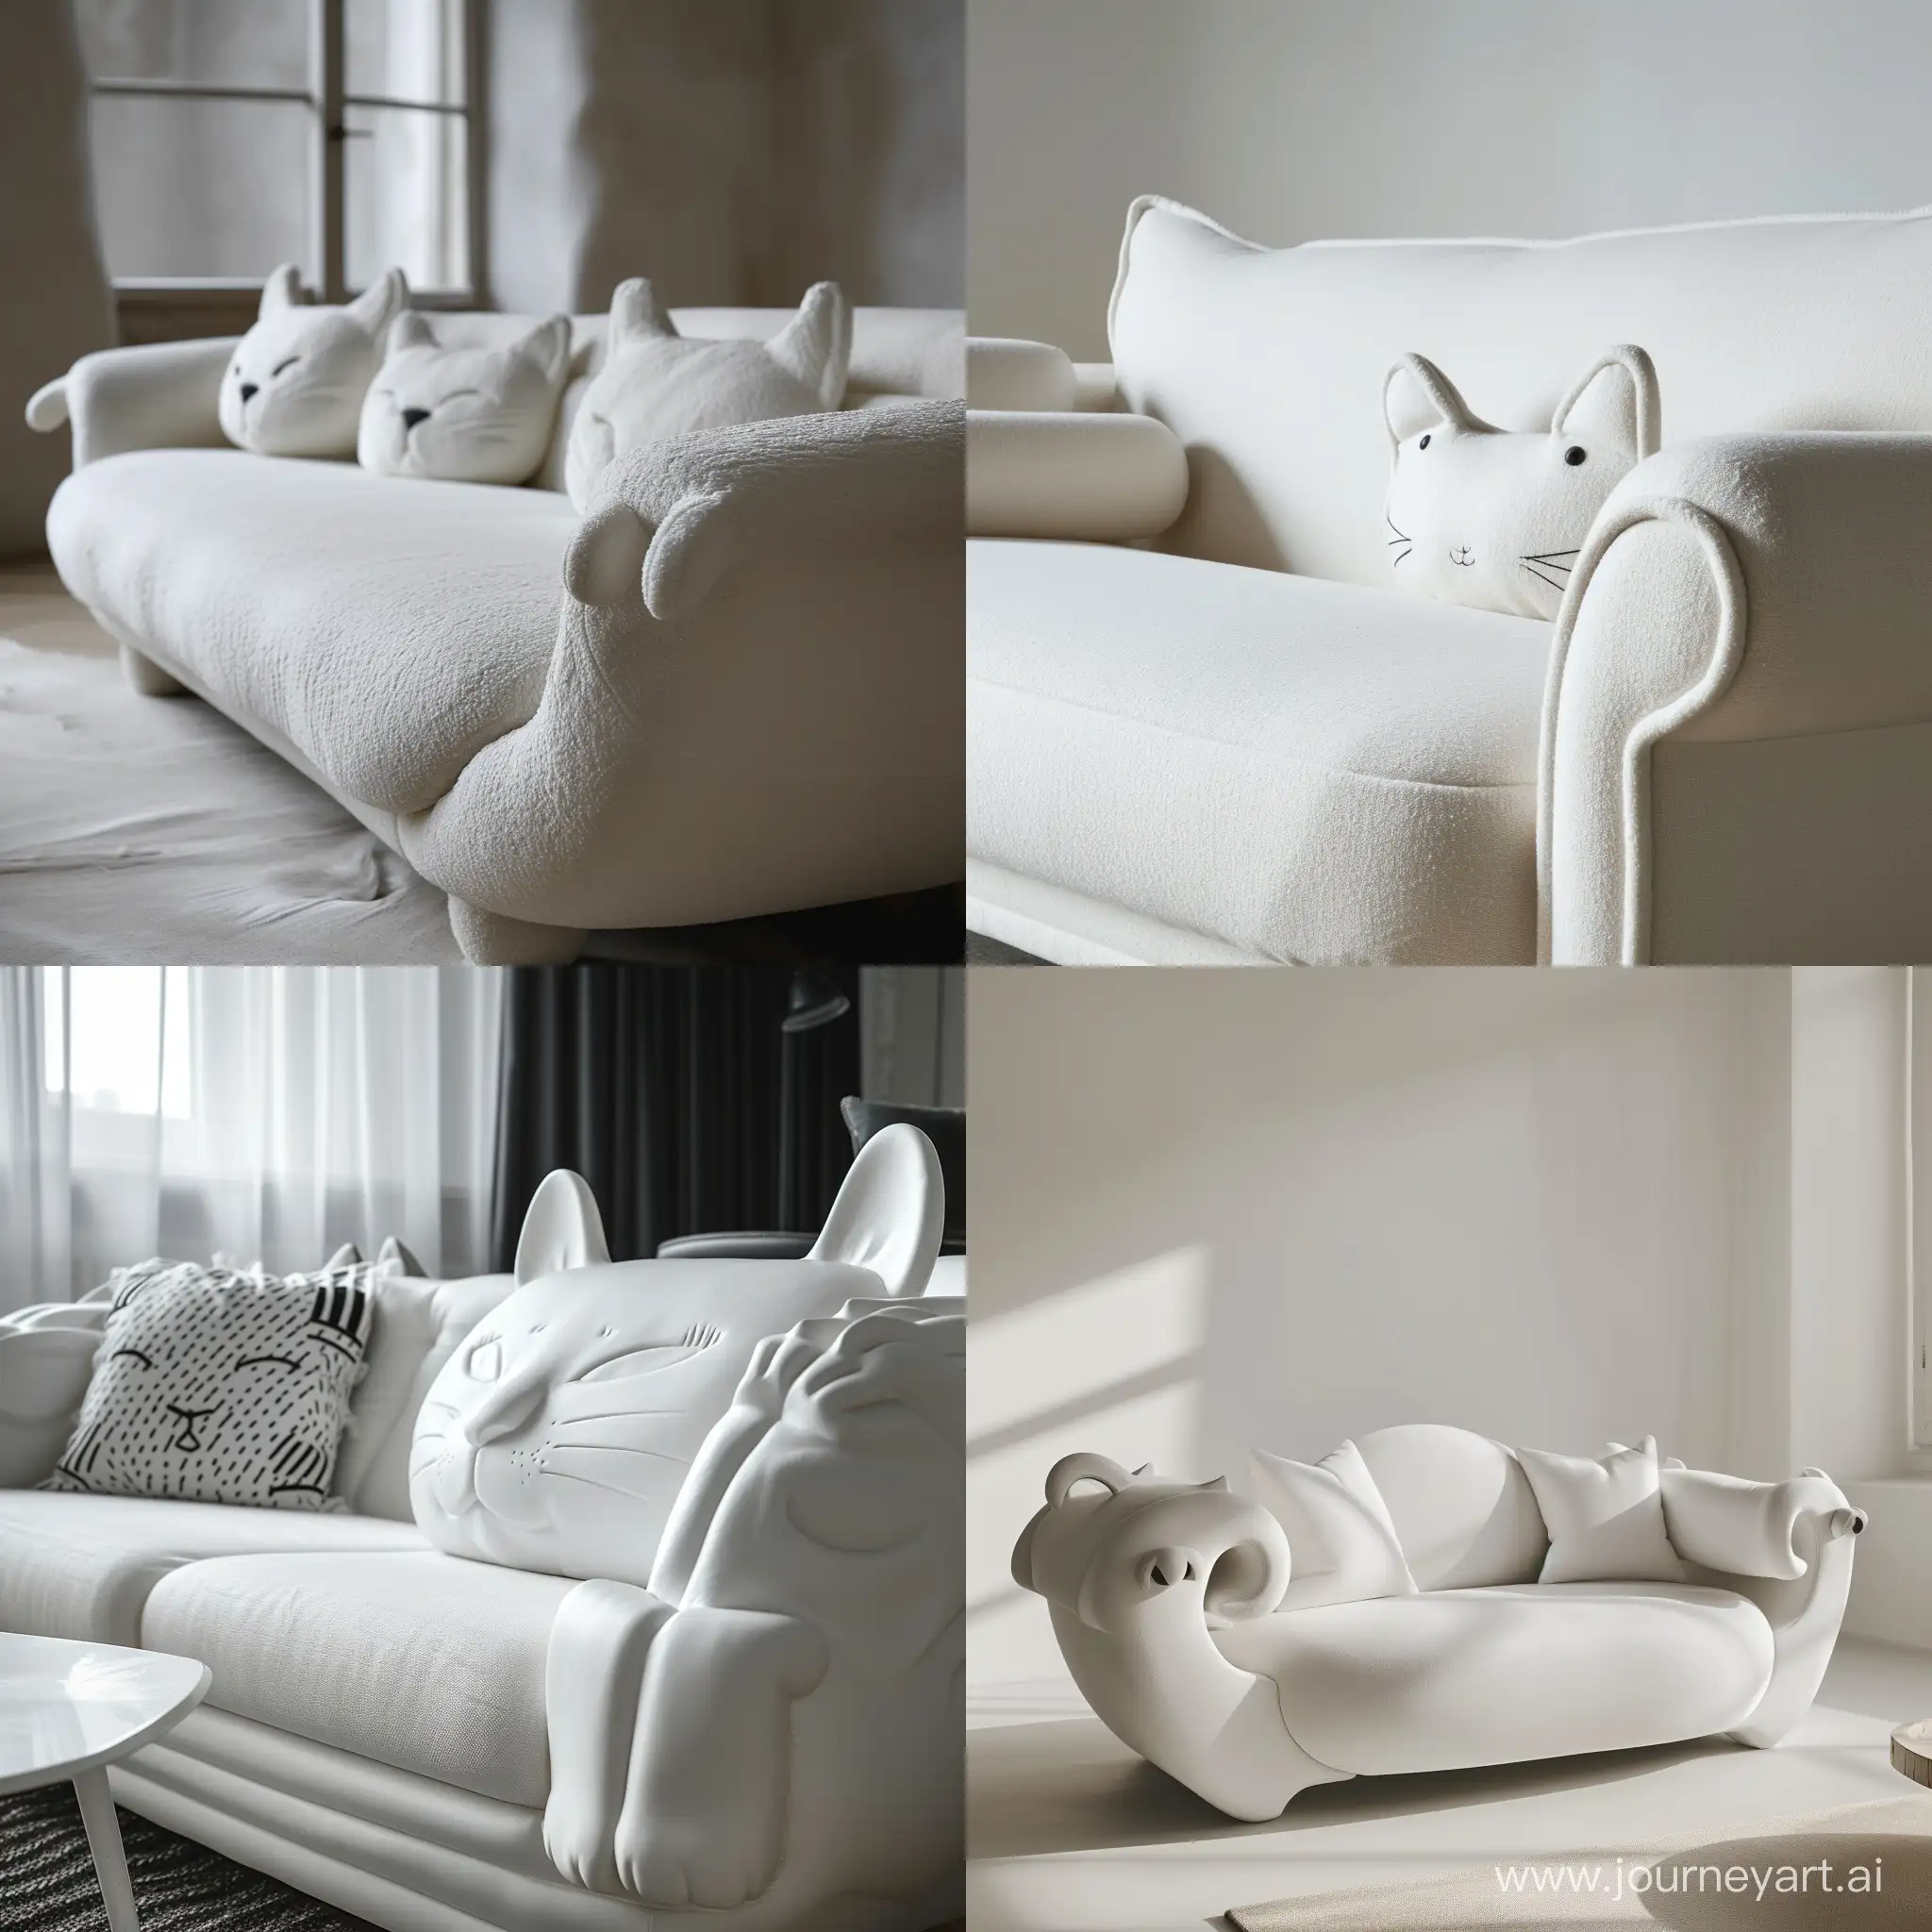 Unique-CatHead-Handled-White-Sofa-Stylish-Furniture-Design